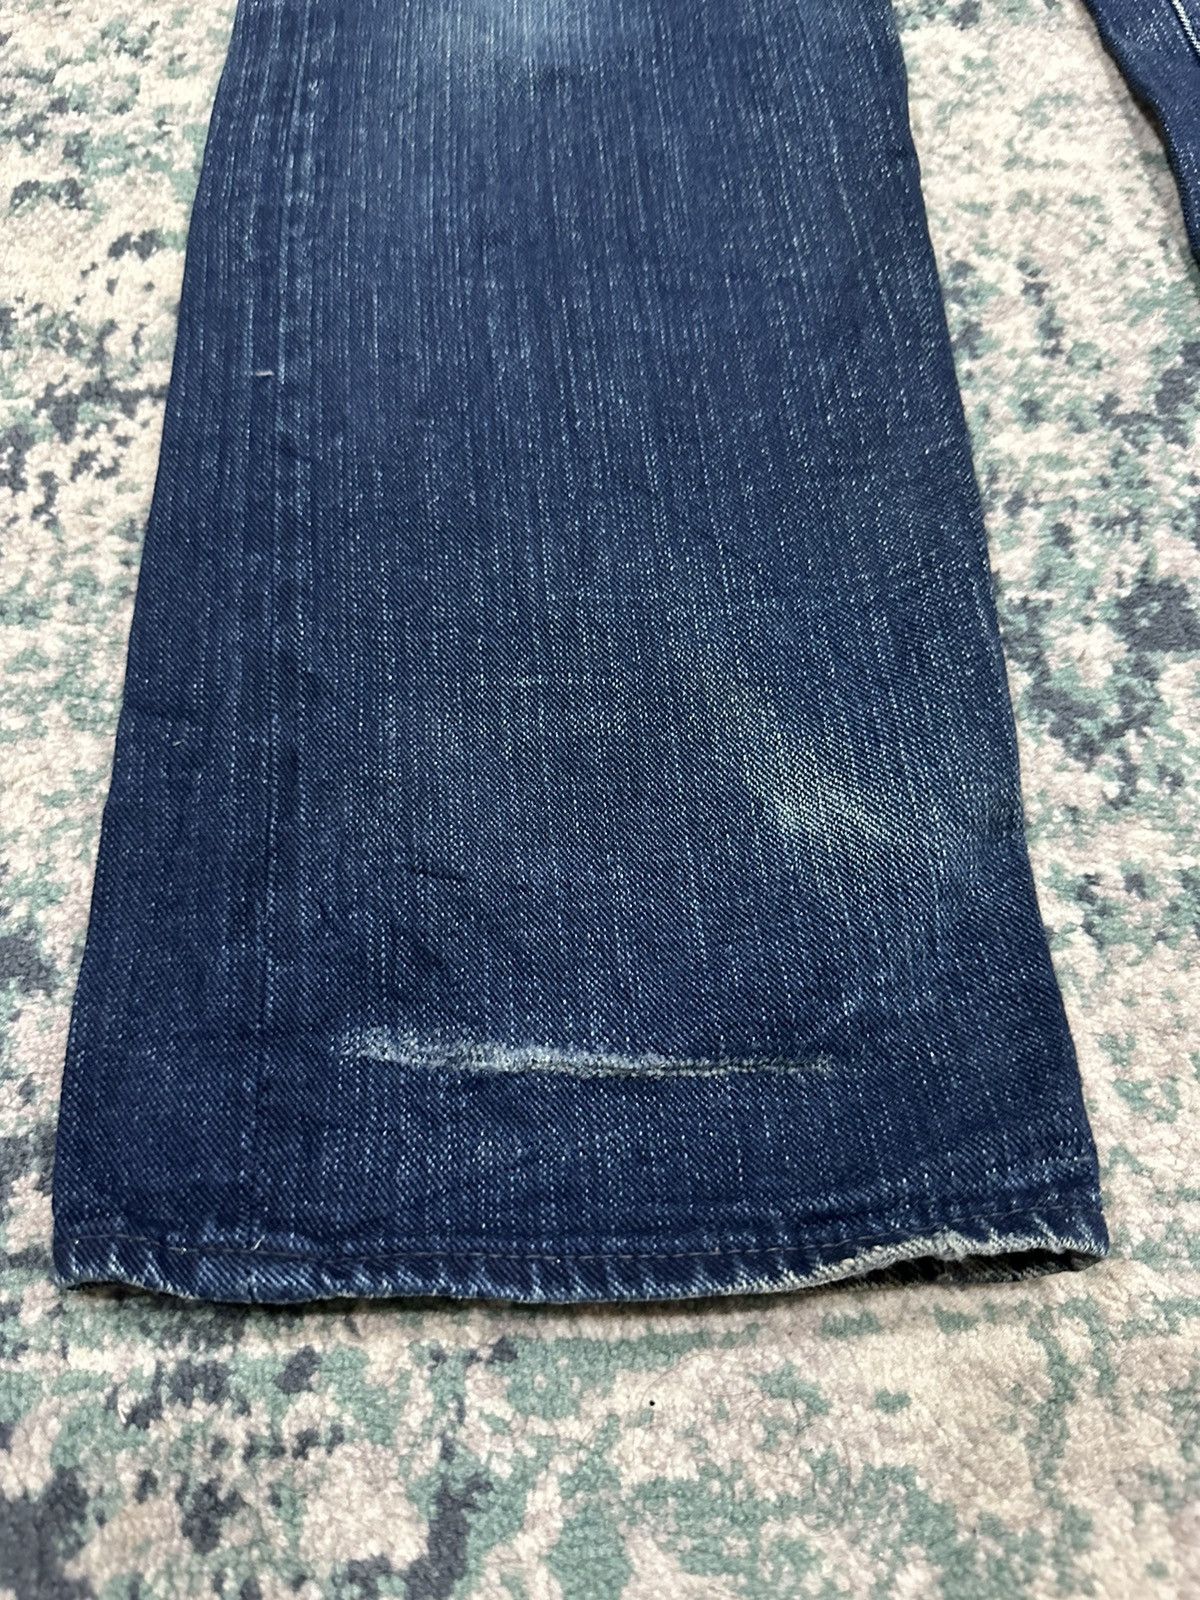 45rpm Japan Selvedge Distressed Denim Pants - 5